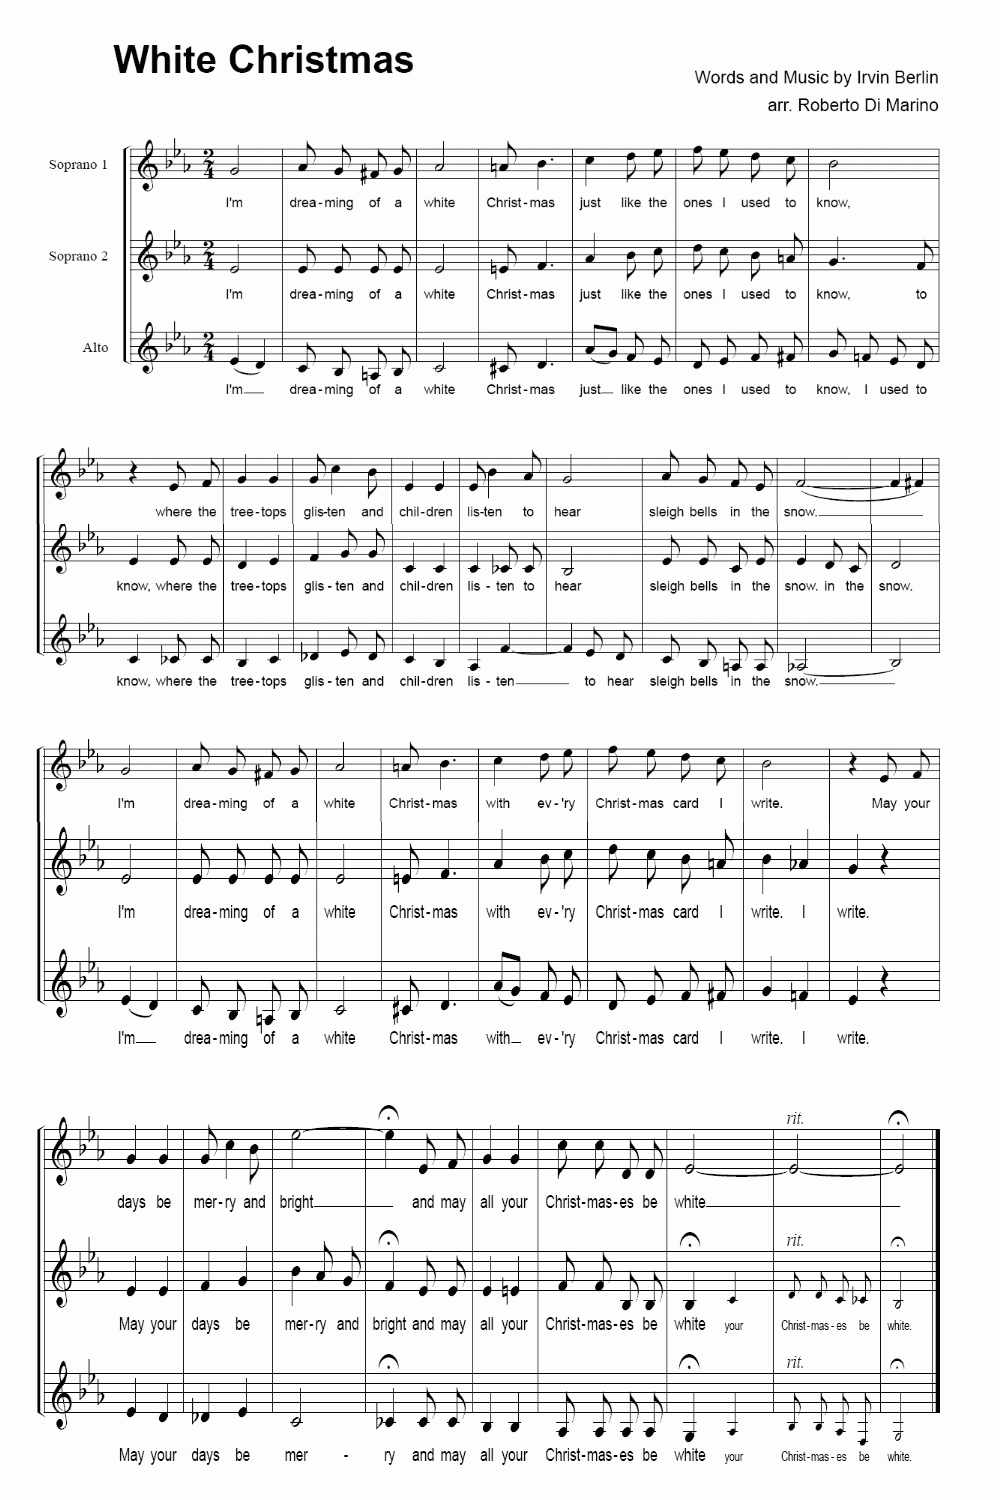 White Christmas Sheet Music - Free Score White Christmas - Free Printable Sheet Music Lyrics